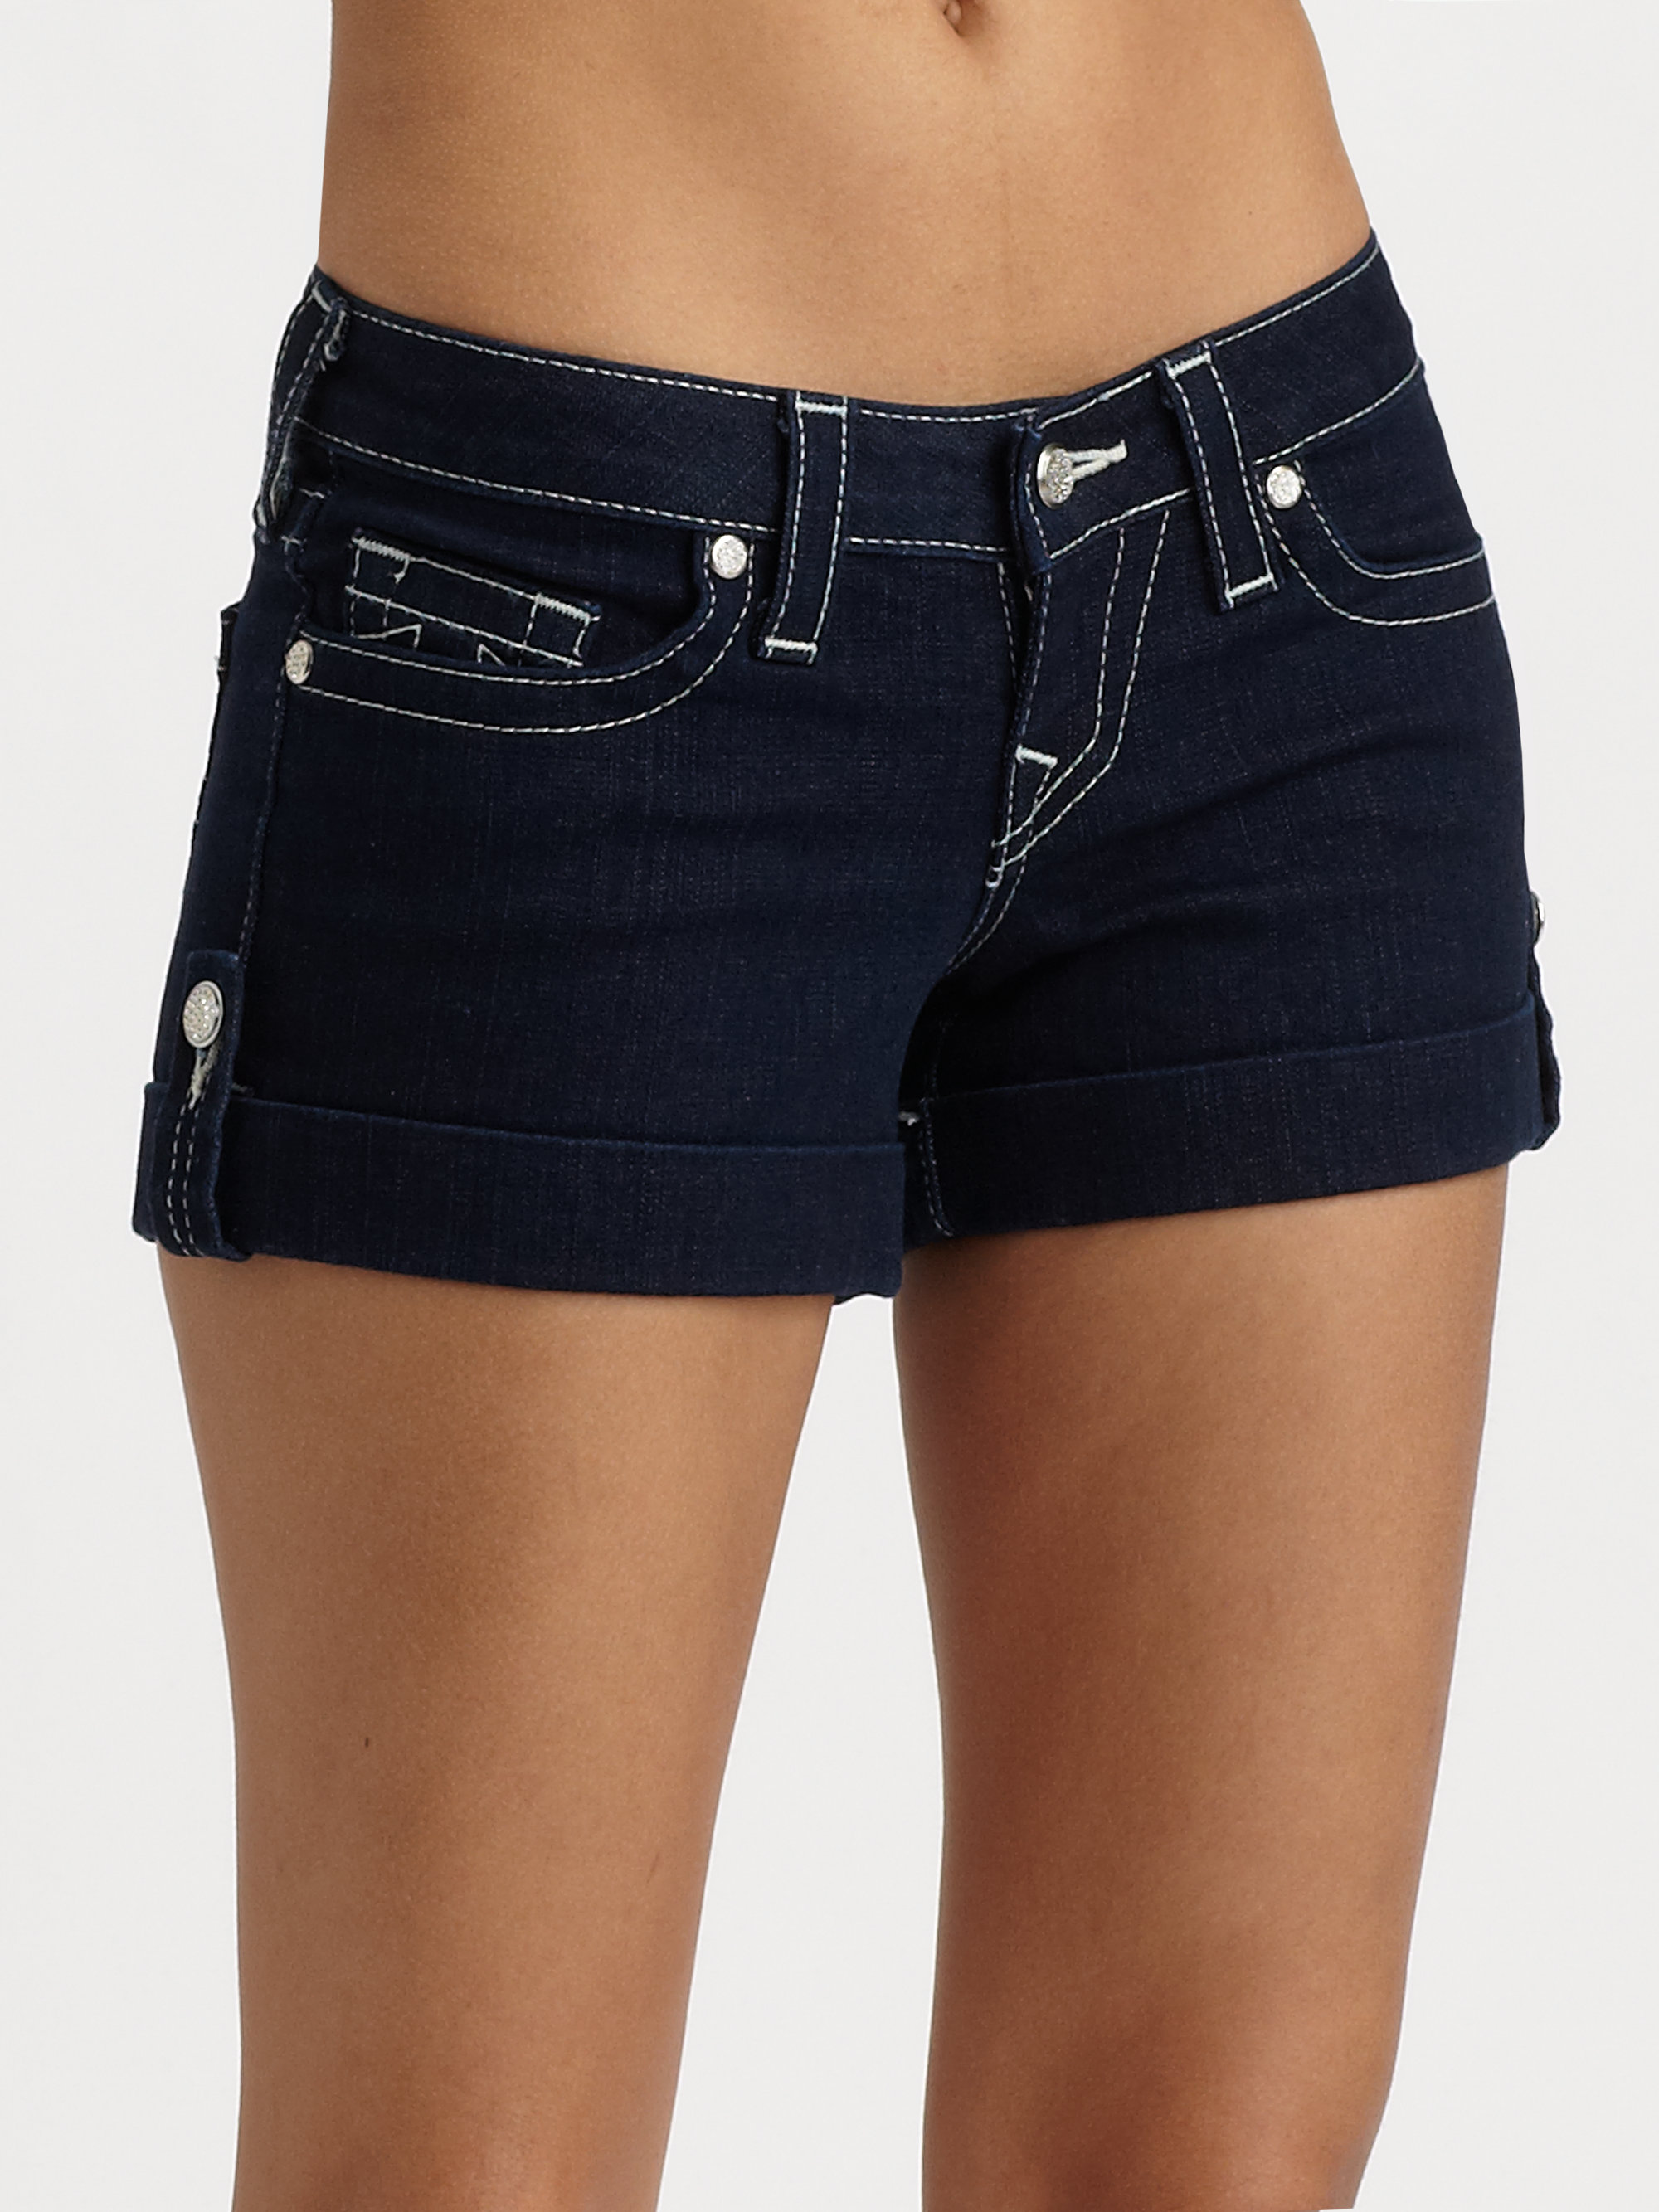 True Religion Jess Pave Denim Shorts in Blue - Lyst